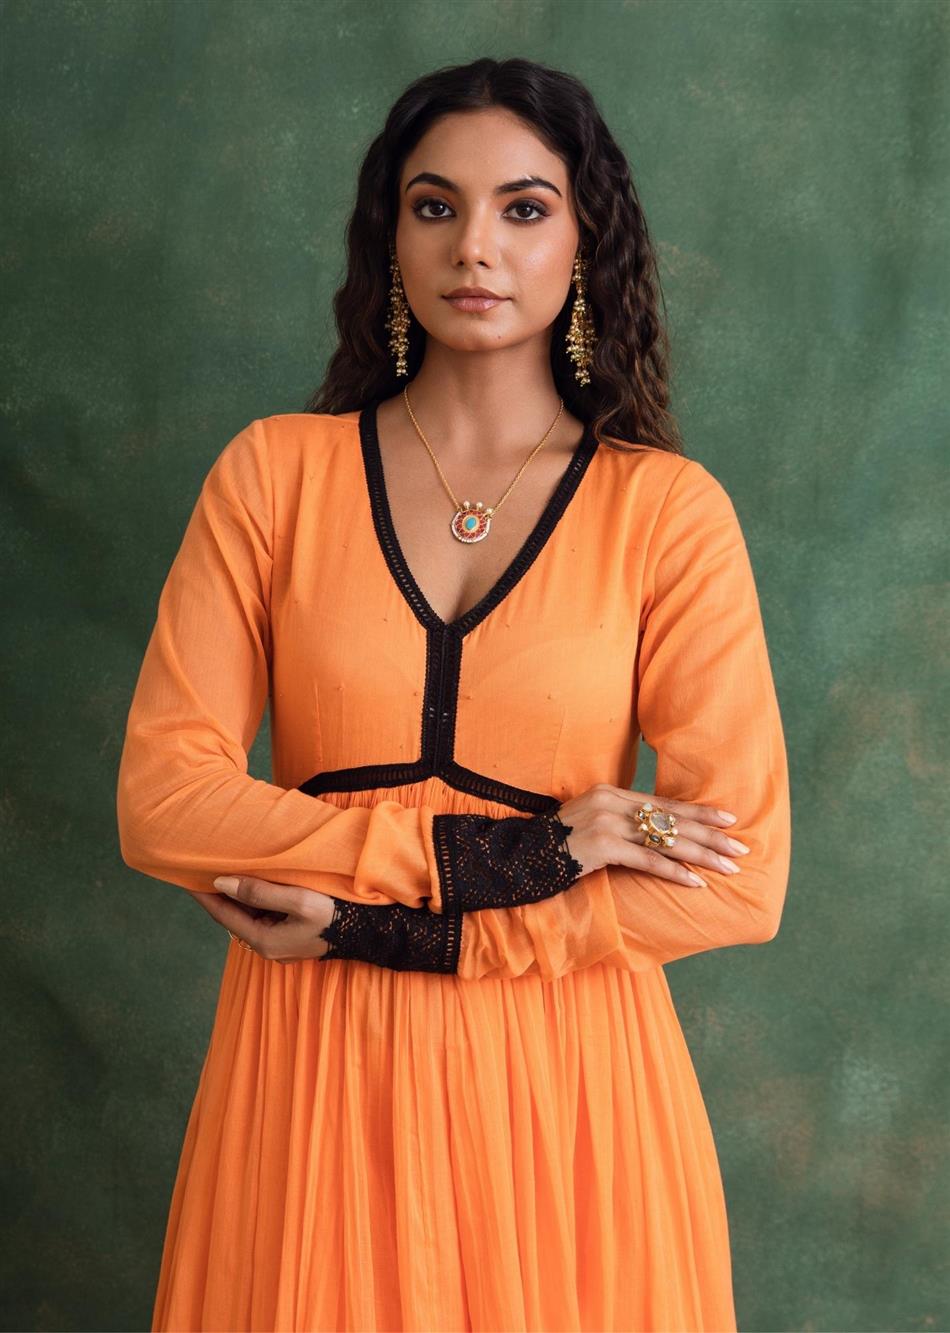 Rangrezee - Candy Orange Anarkali Kurta with Black Lace Details